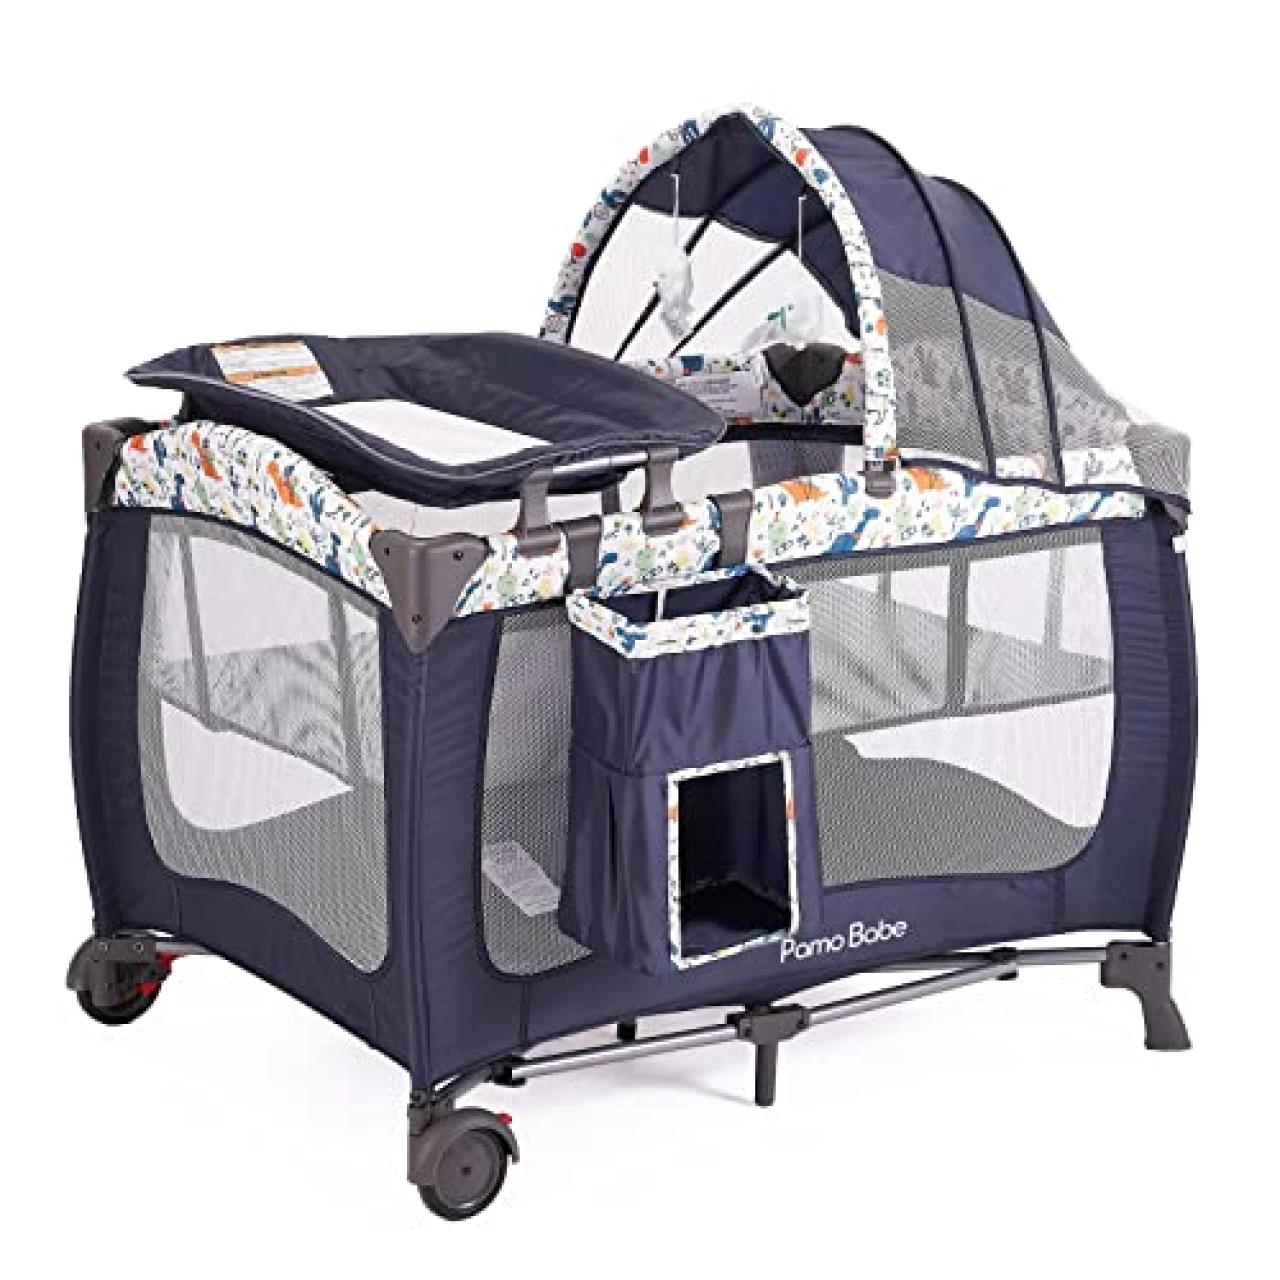 Pamo Babe Portable Baby Nursery Center Play Yard with Wheels(Navy Blue)